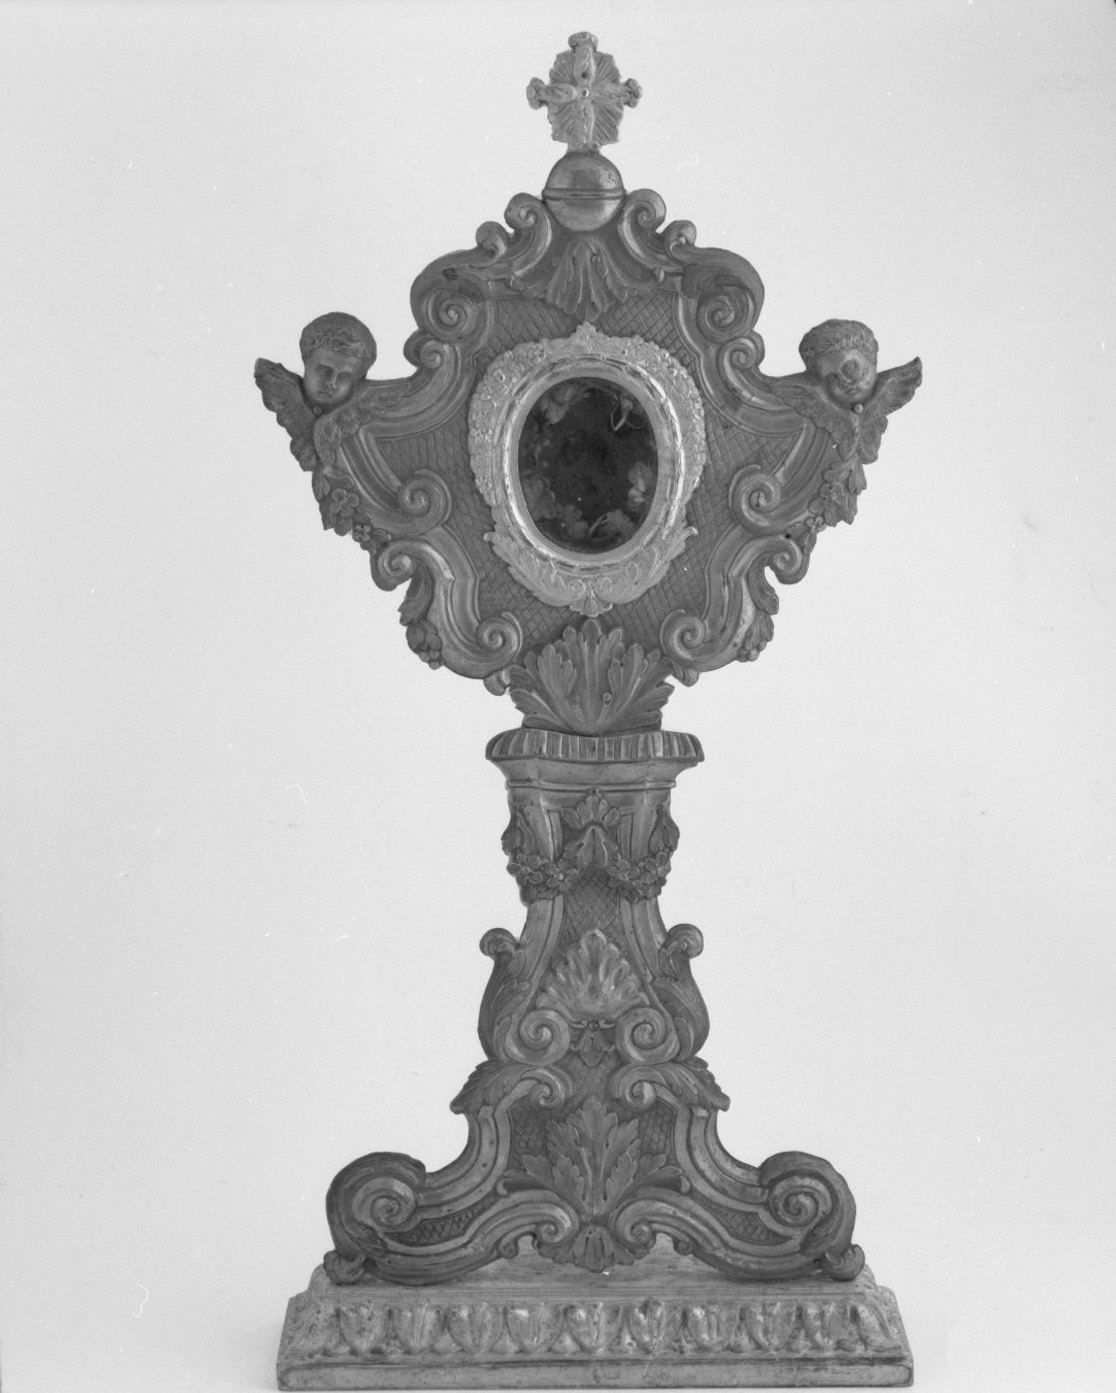 cherubini e motivi decorativi fitomorfi (reliquiario - a ostensorio) - bottega toscana (secc. XVIII/ XIX)